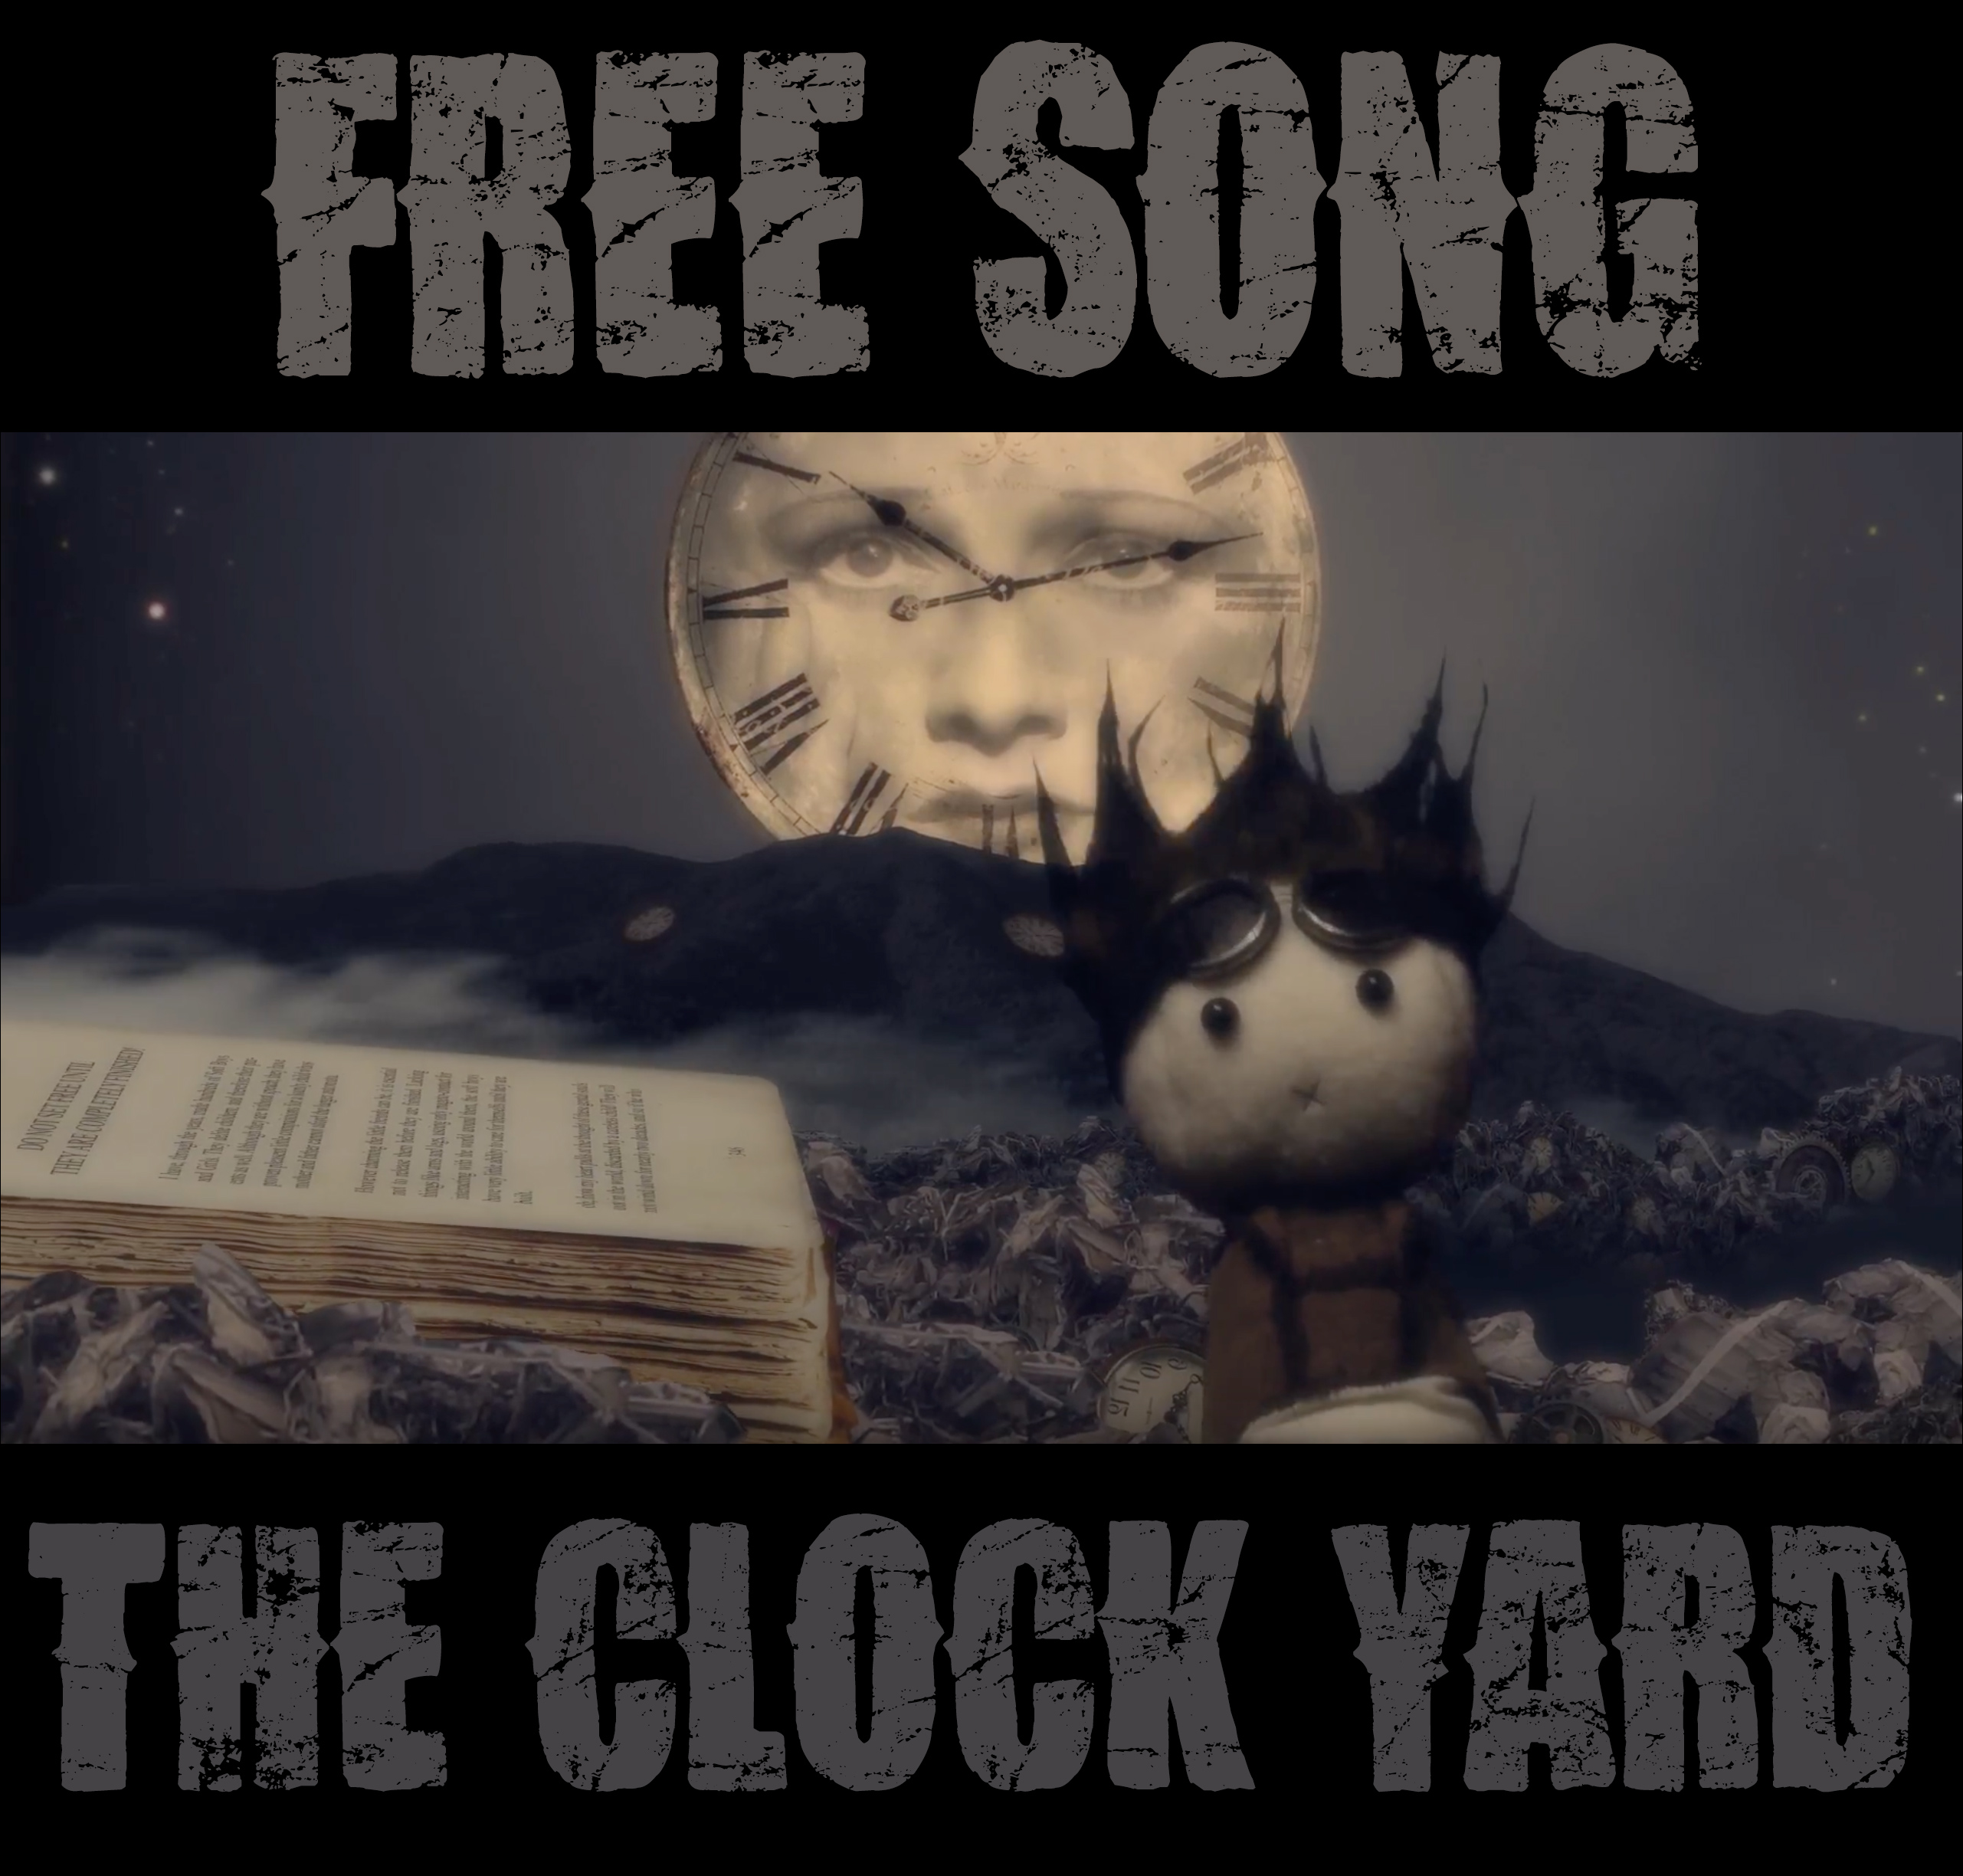 The Clock Yard - FREE DOWLOAD